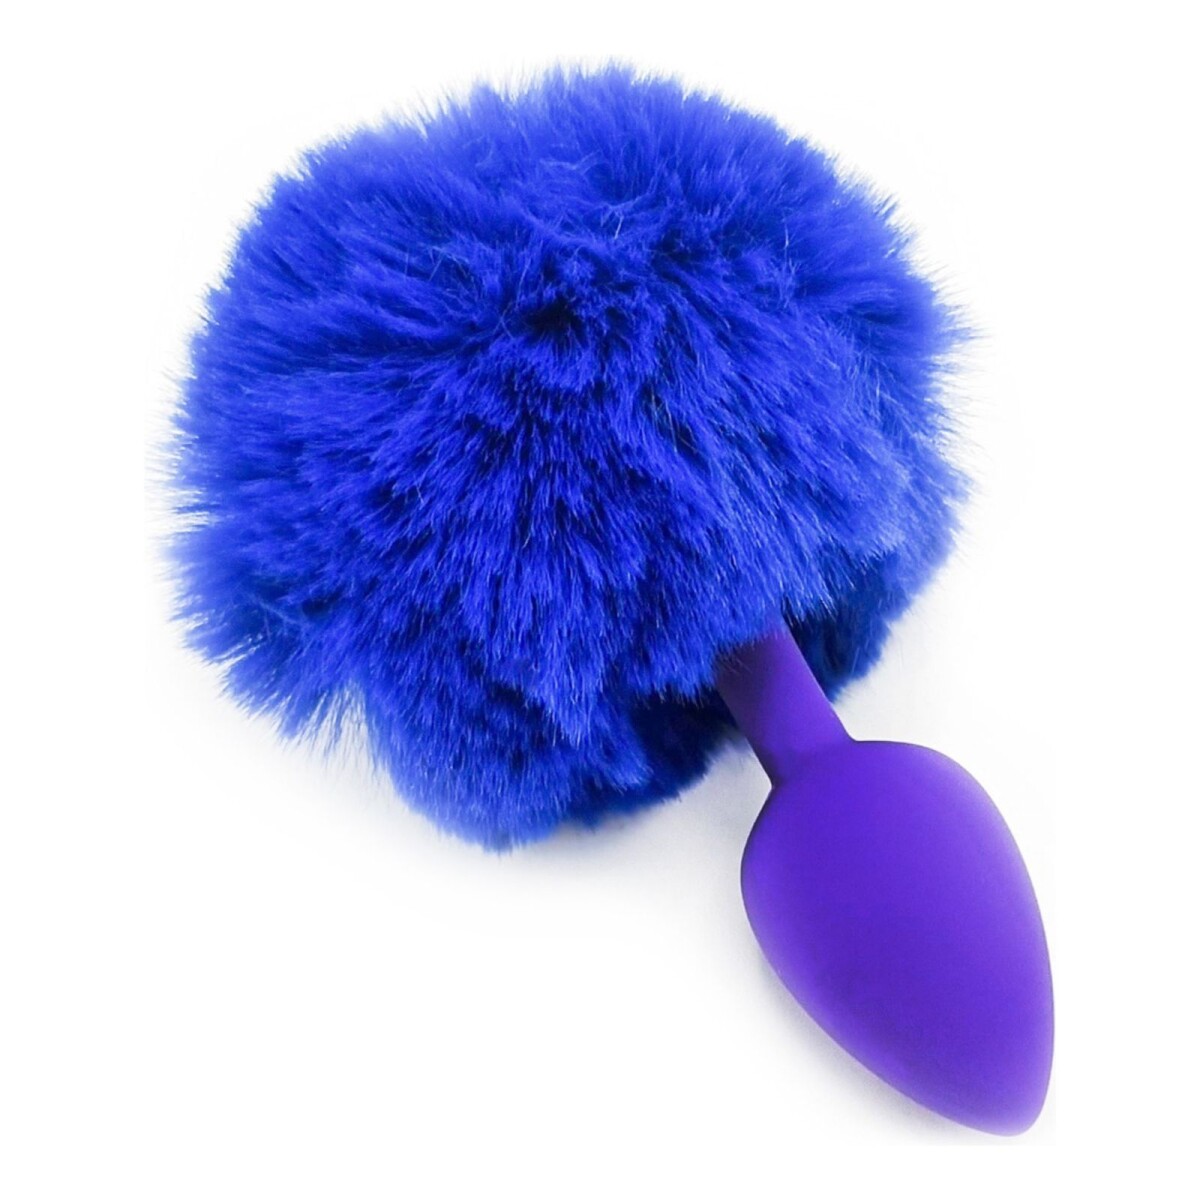 Plug Anal Pompon Conejita Consolador Estimulador Talle L - Color Variante Azul violeta 